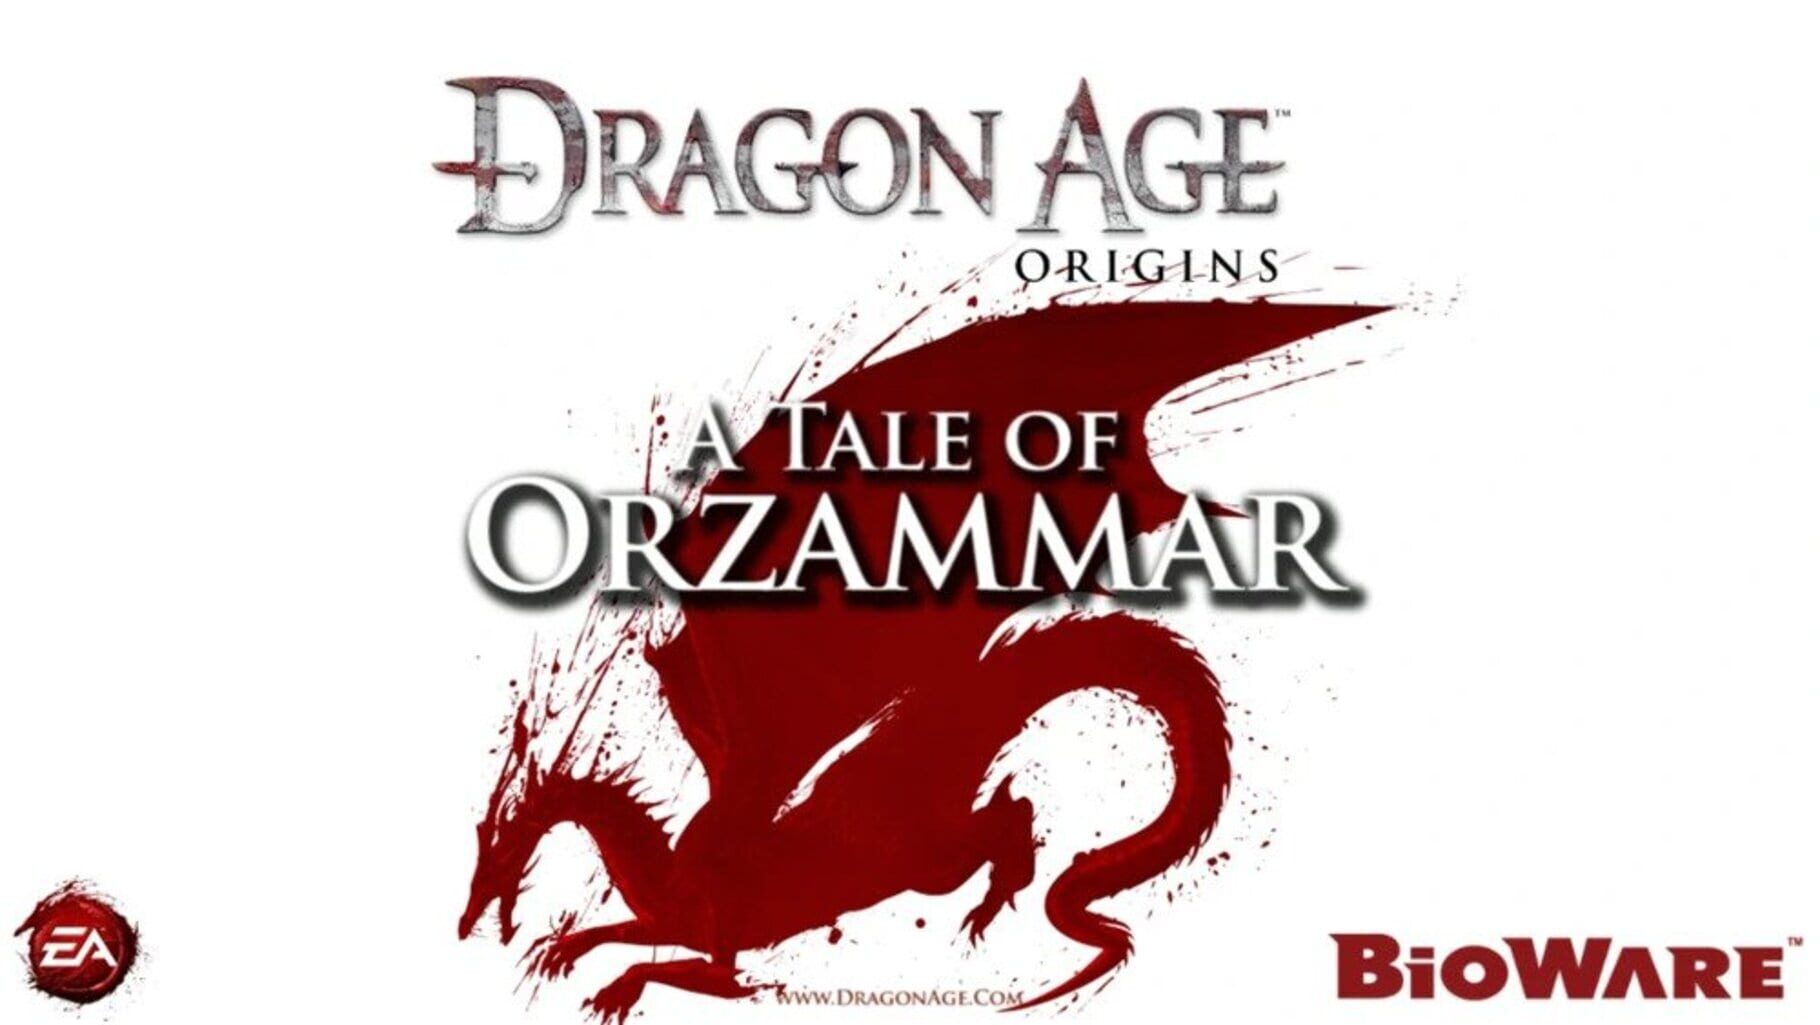 Dragon Age: Origins - A Tale of Orzammar (2009)